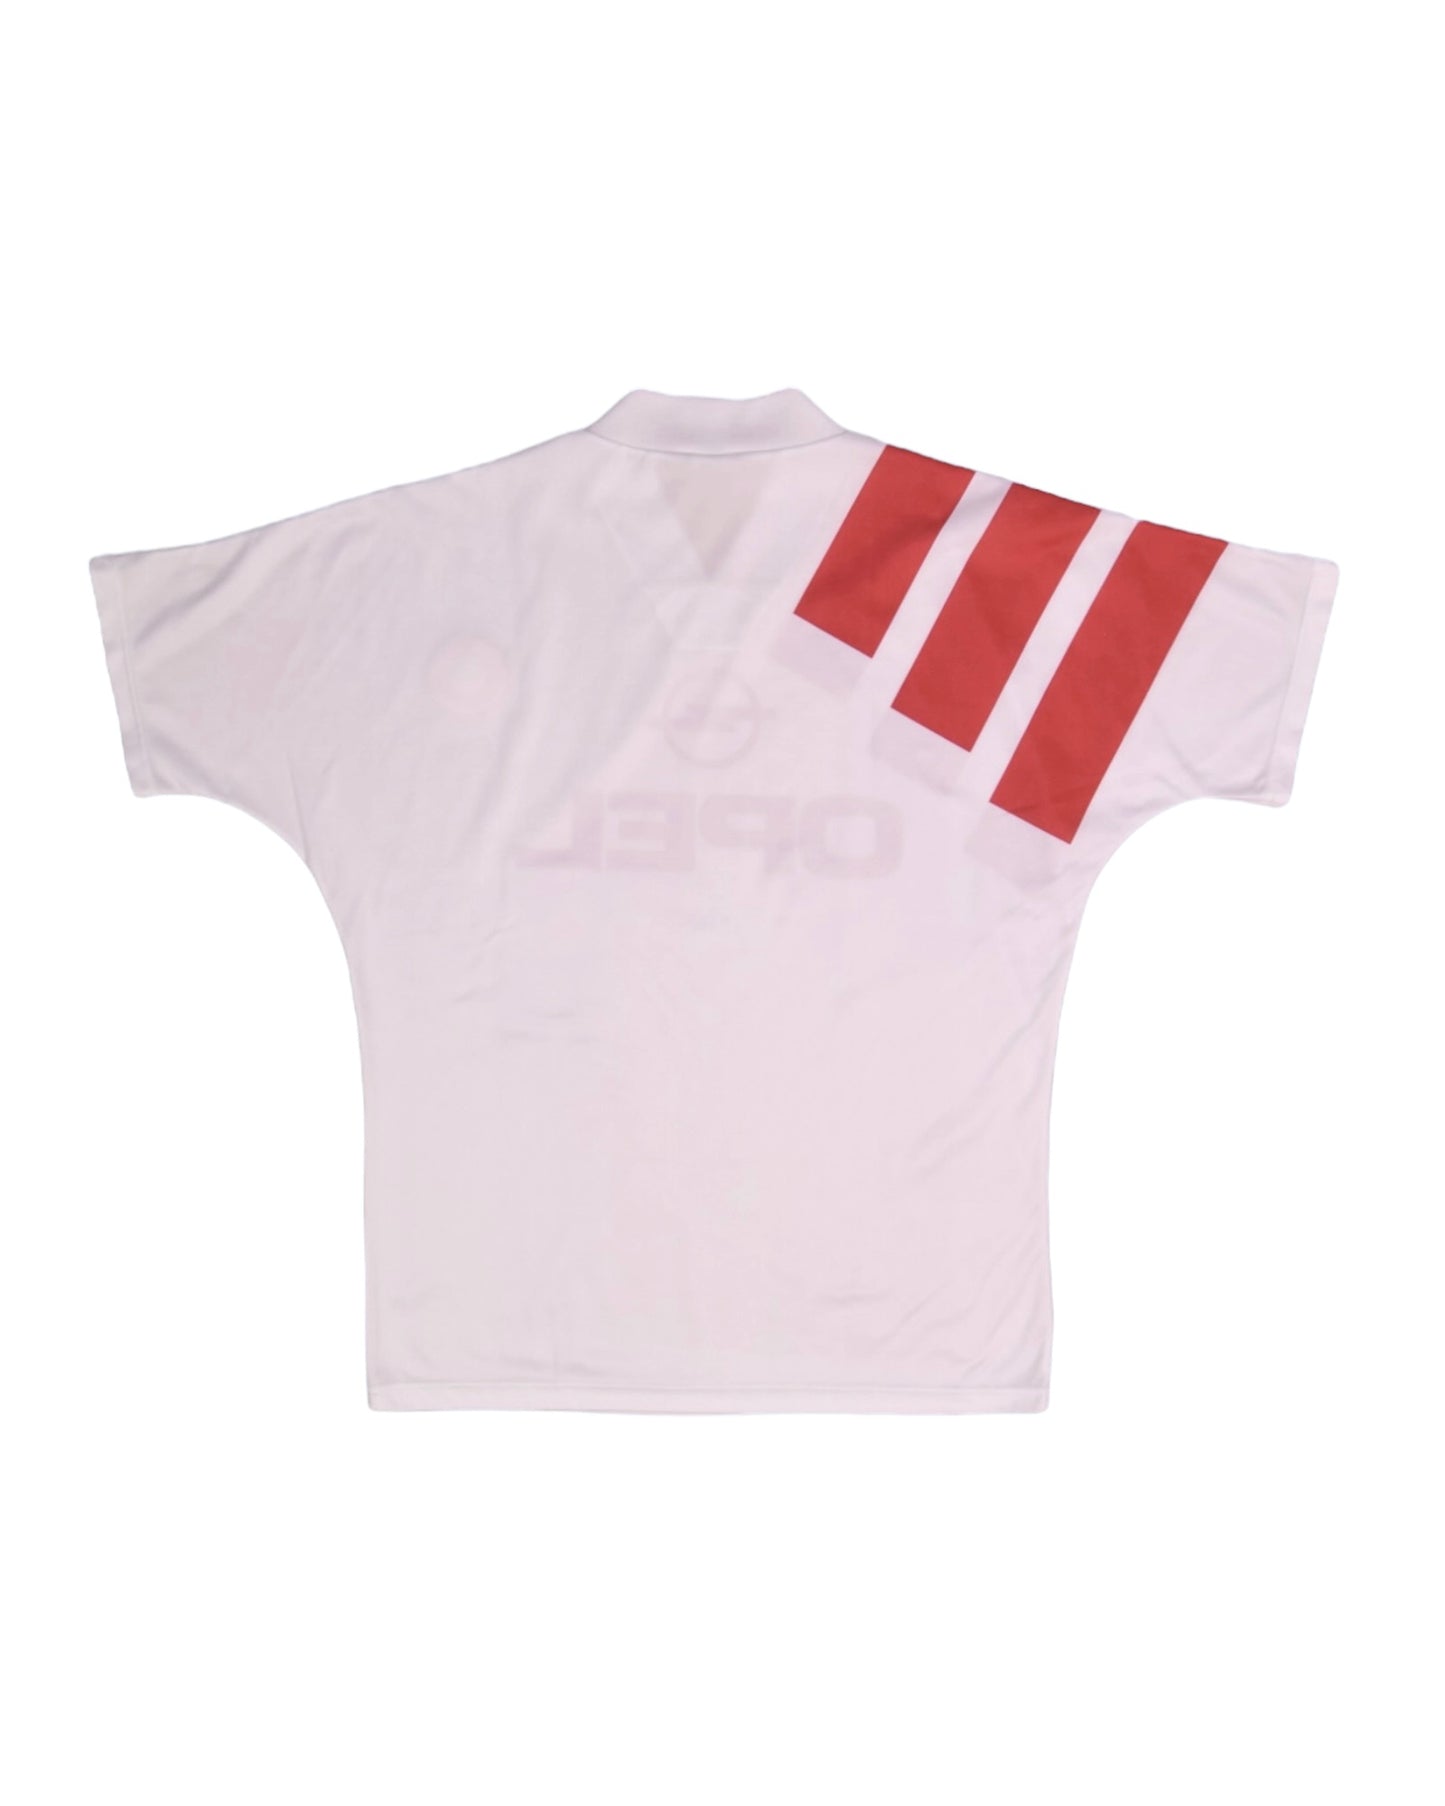 Bayern München Adidas Equipment 1992 - 1993 Away Football Shirt White Opel Size M Made in UK